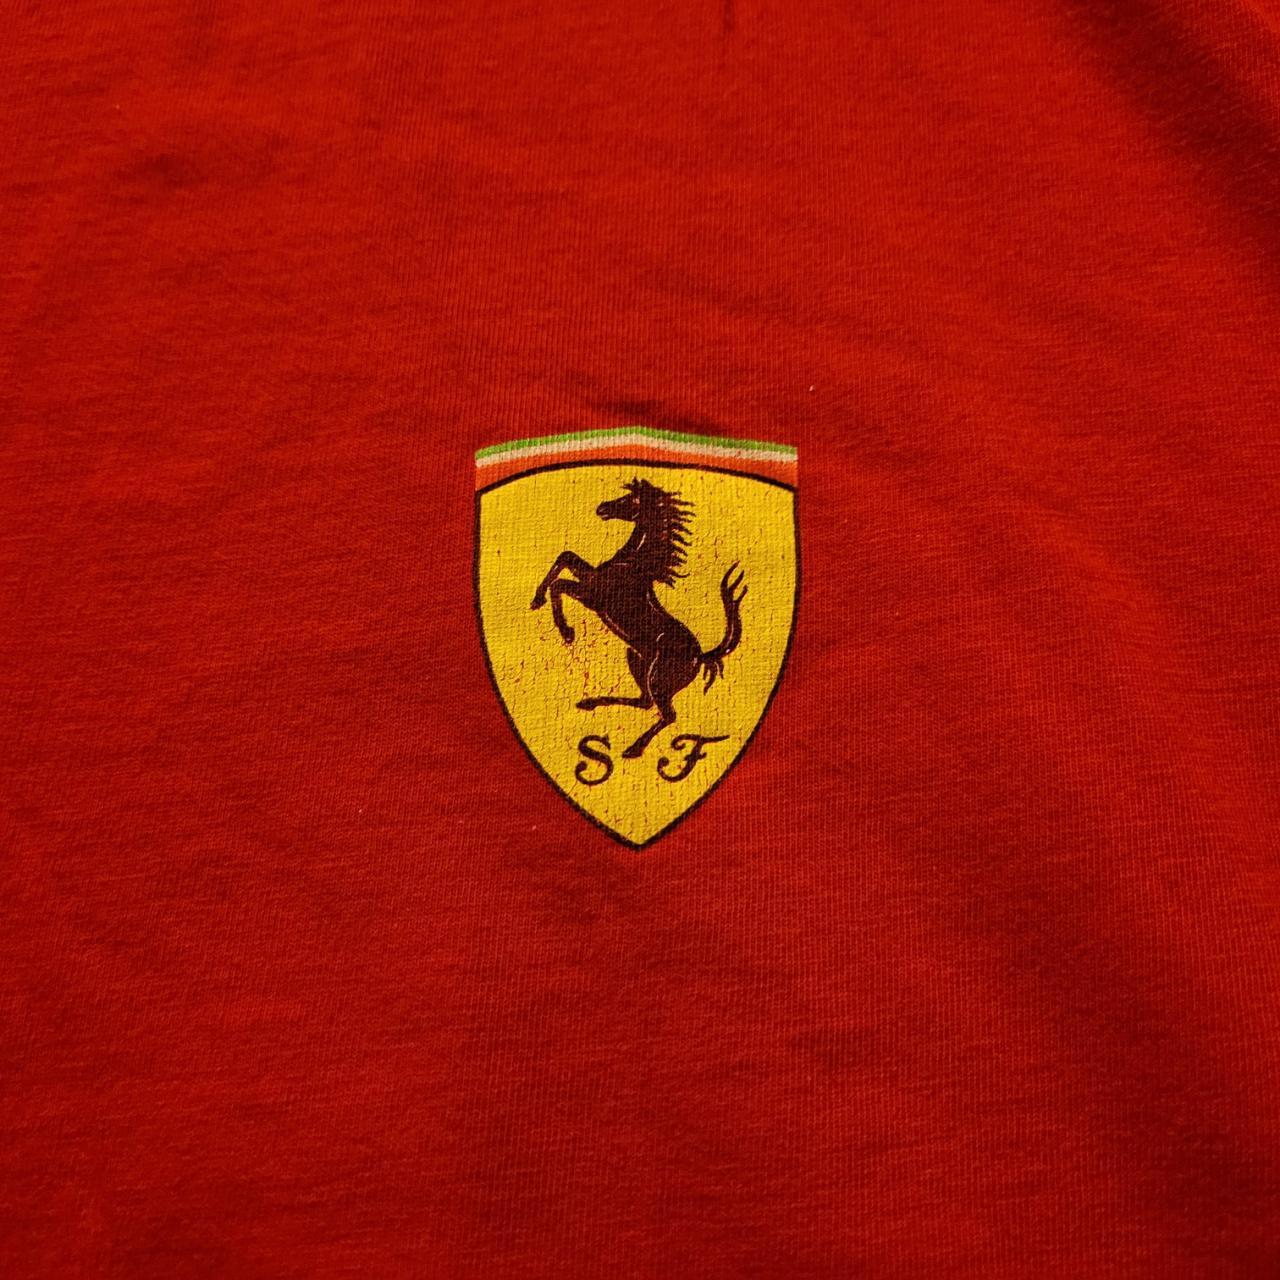 Ferrari, Prancing Horse logo over left breast and... - Depop